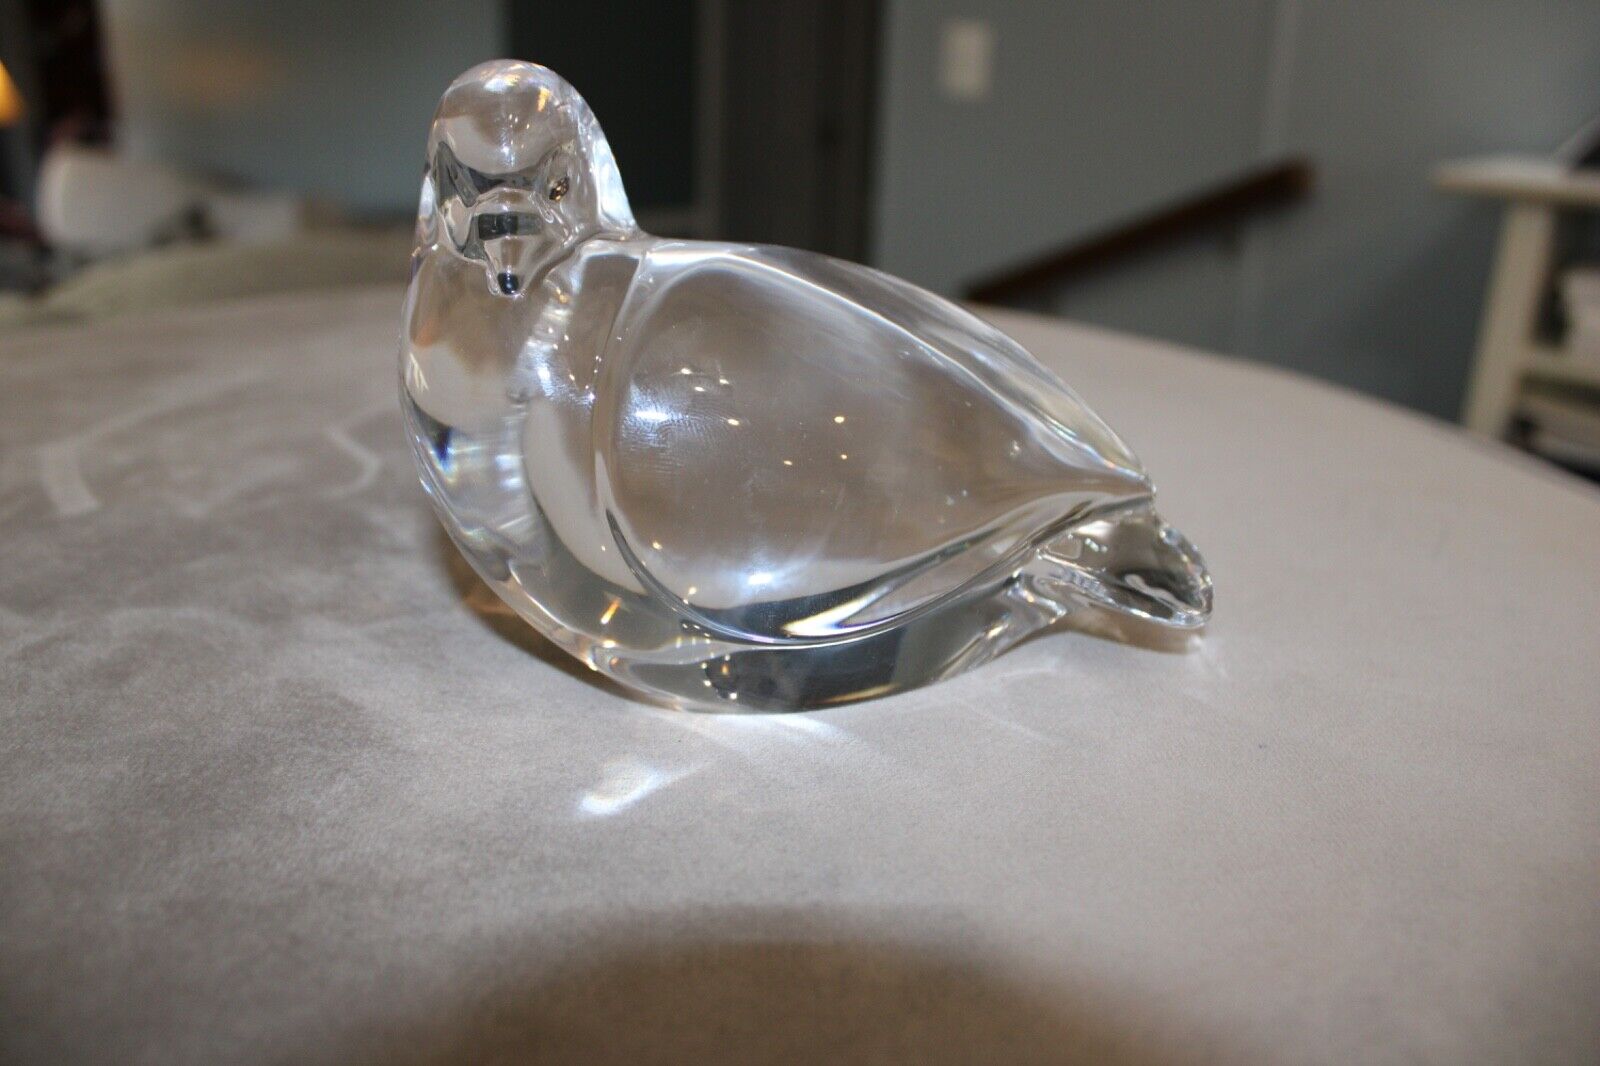 Large Val St Lambert - Kathleen DeSousa Dove / Bird Crystal Sculpture - Signed 